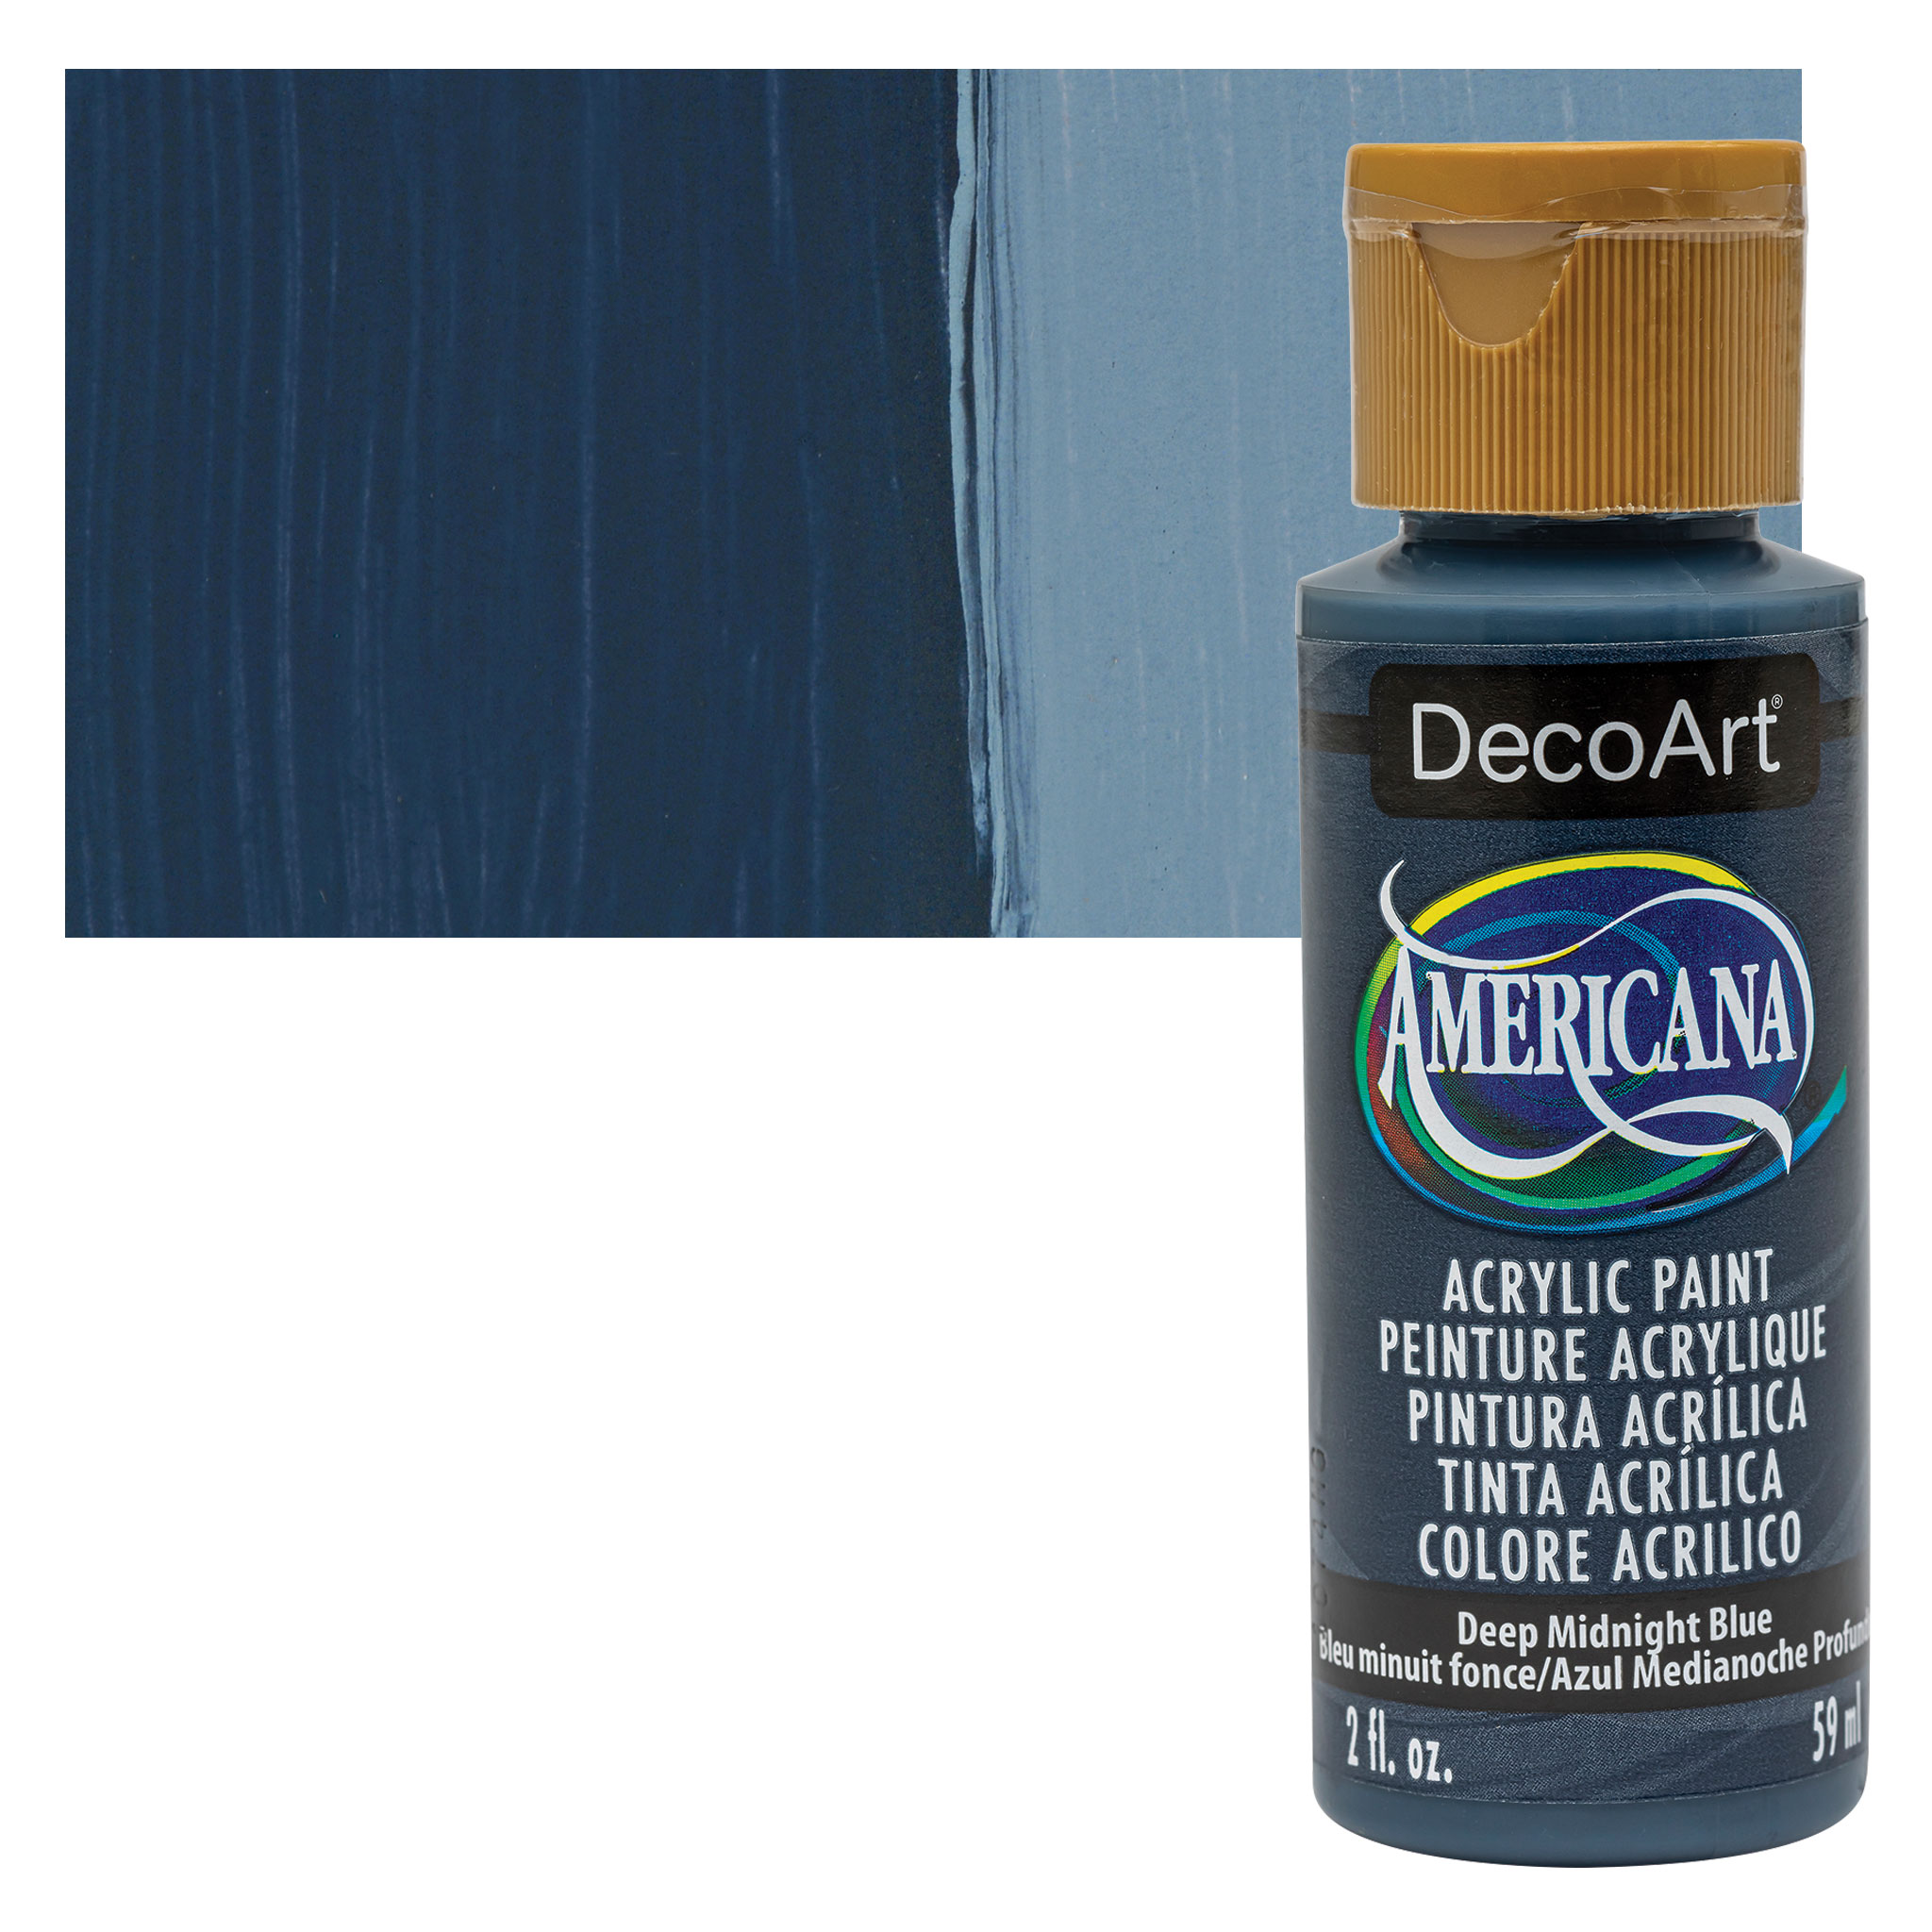 DecoArt Americana Acrylic Paint, 2-Ounce, Sweet Mint